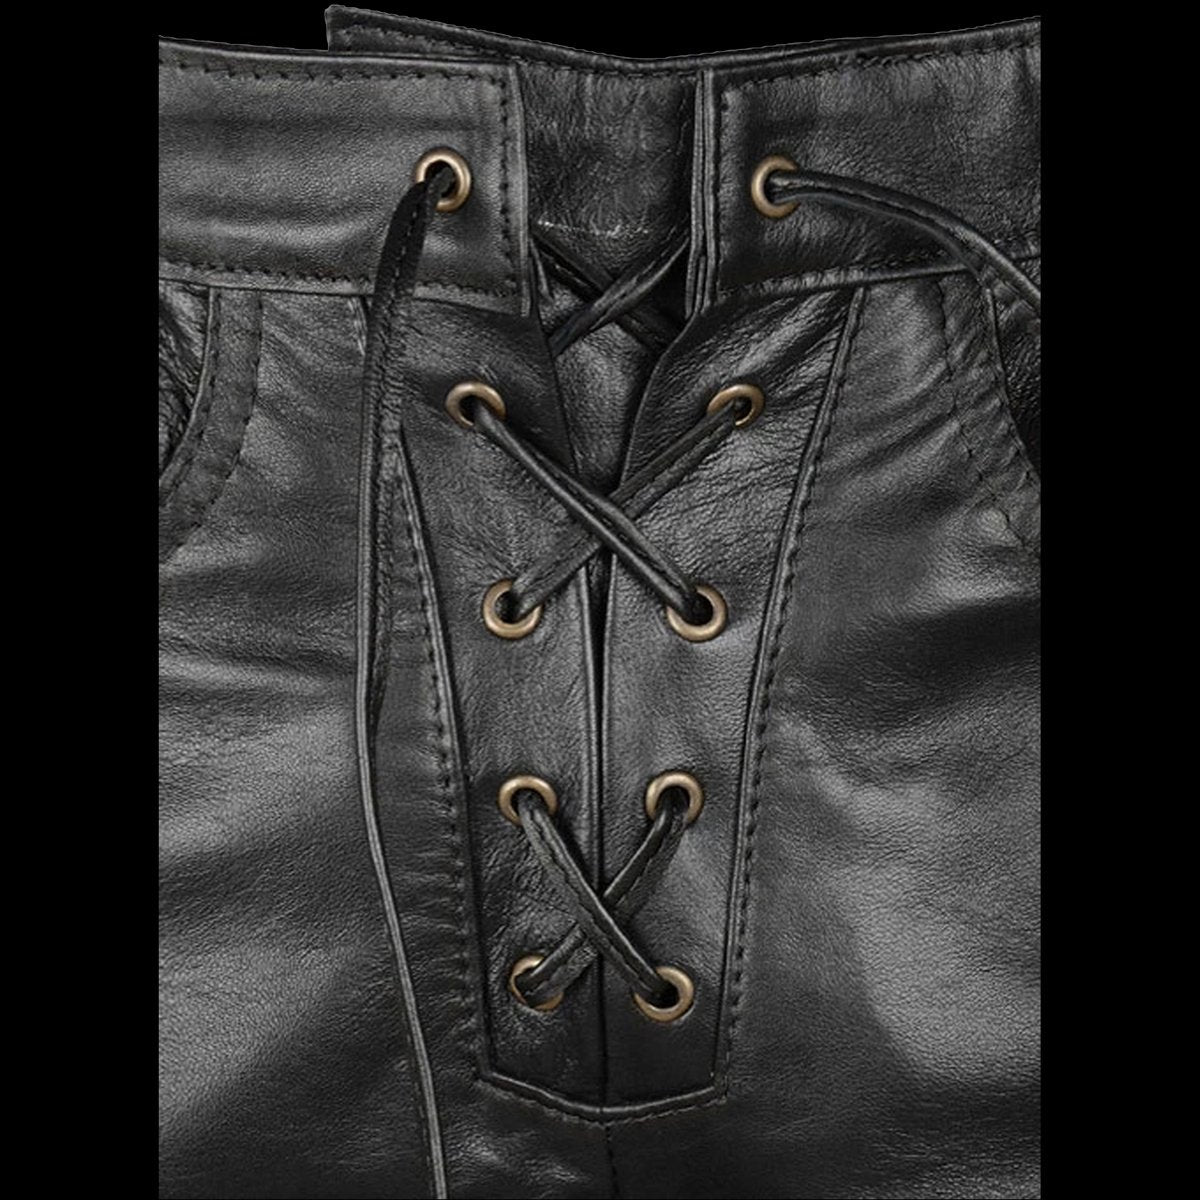 <B>ROCKSTAR RIDING PANTS</B><BR>Leather, Armored Option